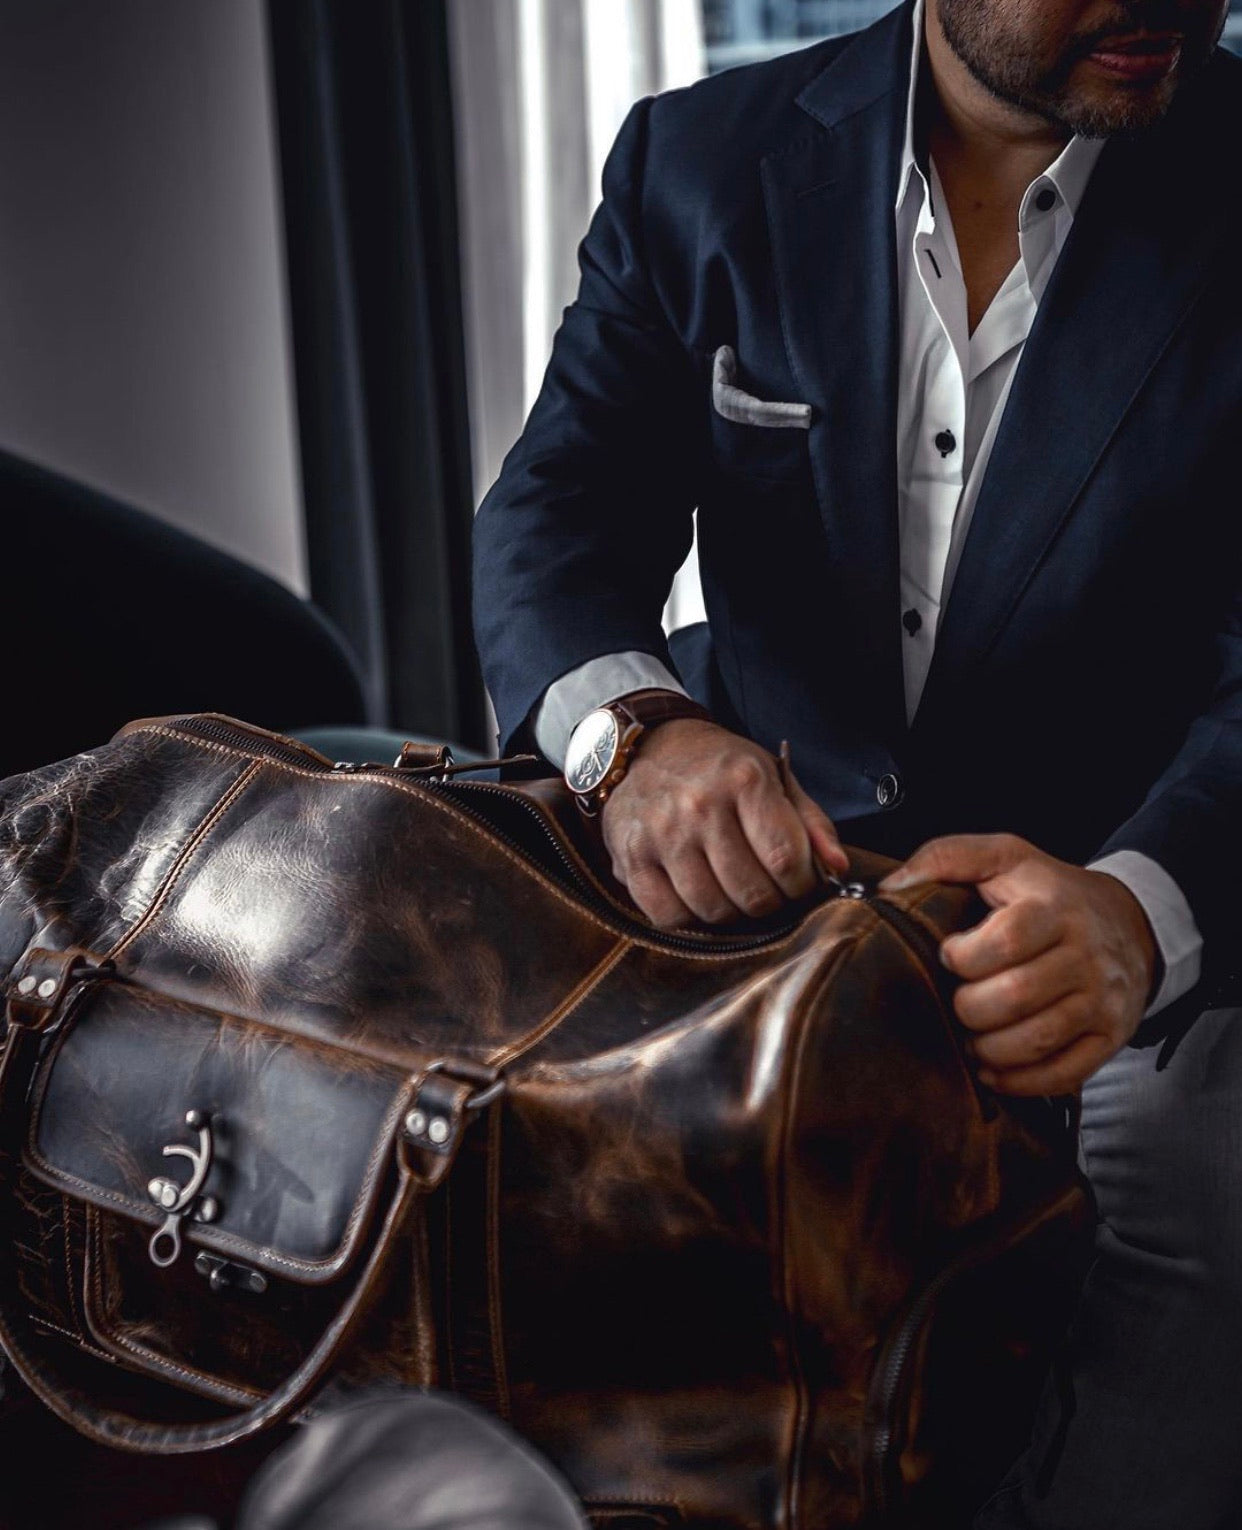 The “Hemingway” Buffalo Leather Duffle Bag by Vintage Gentlemen